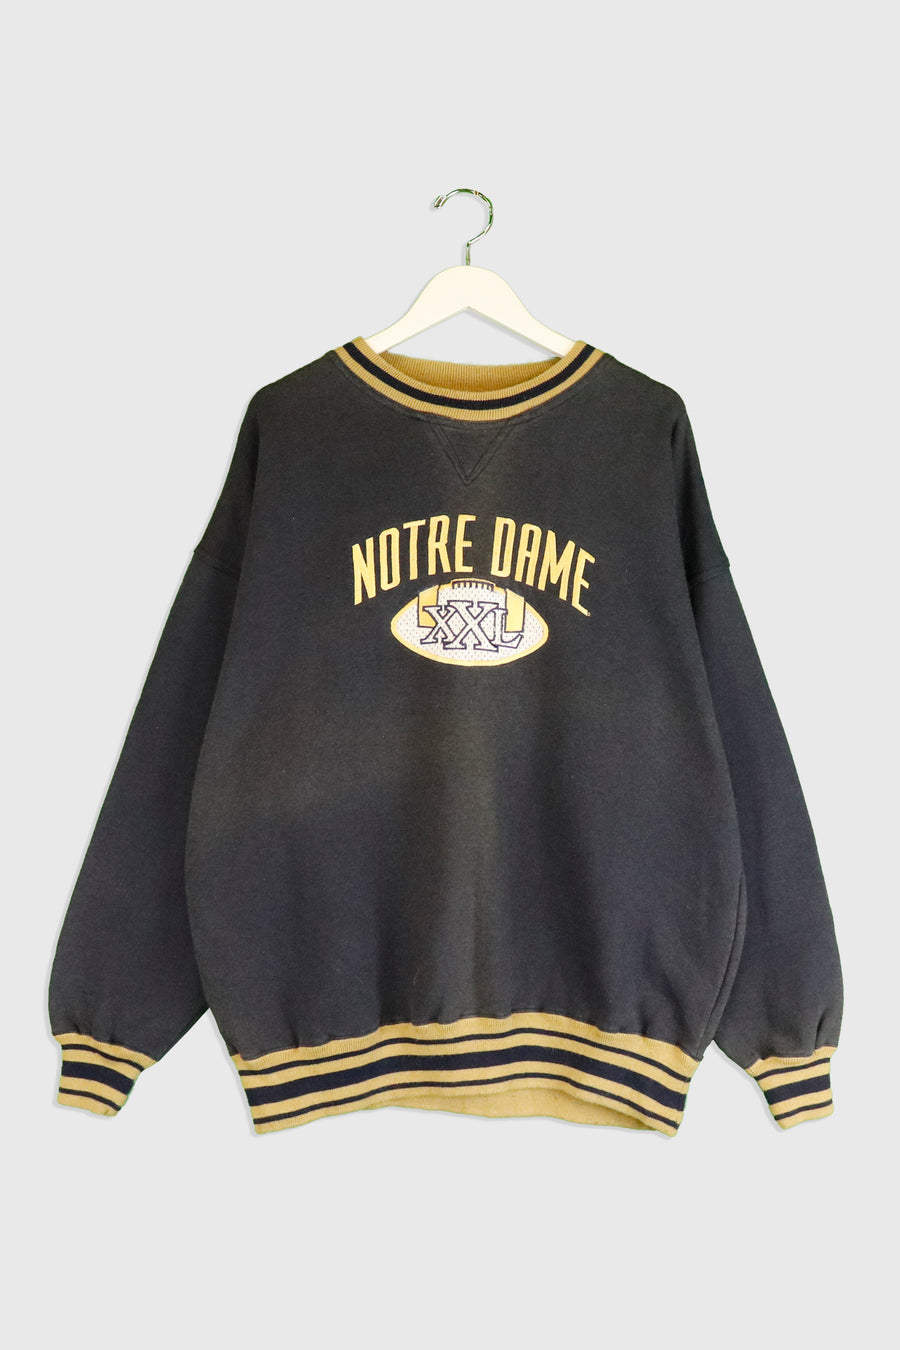 Vintage Notre Dame Football Emroidered Mesh Logo Sweatshirt Sz L